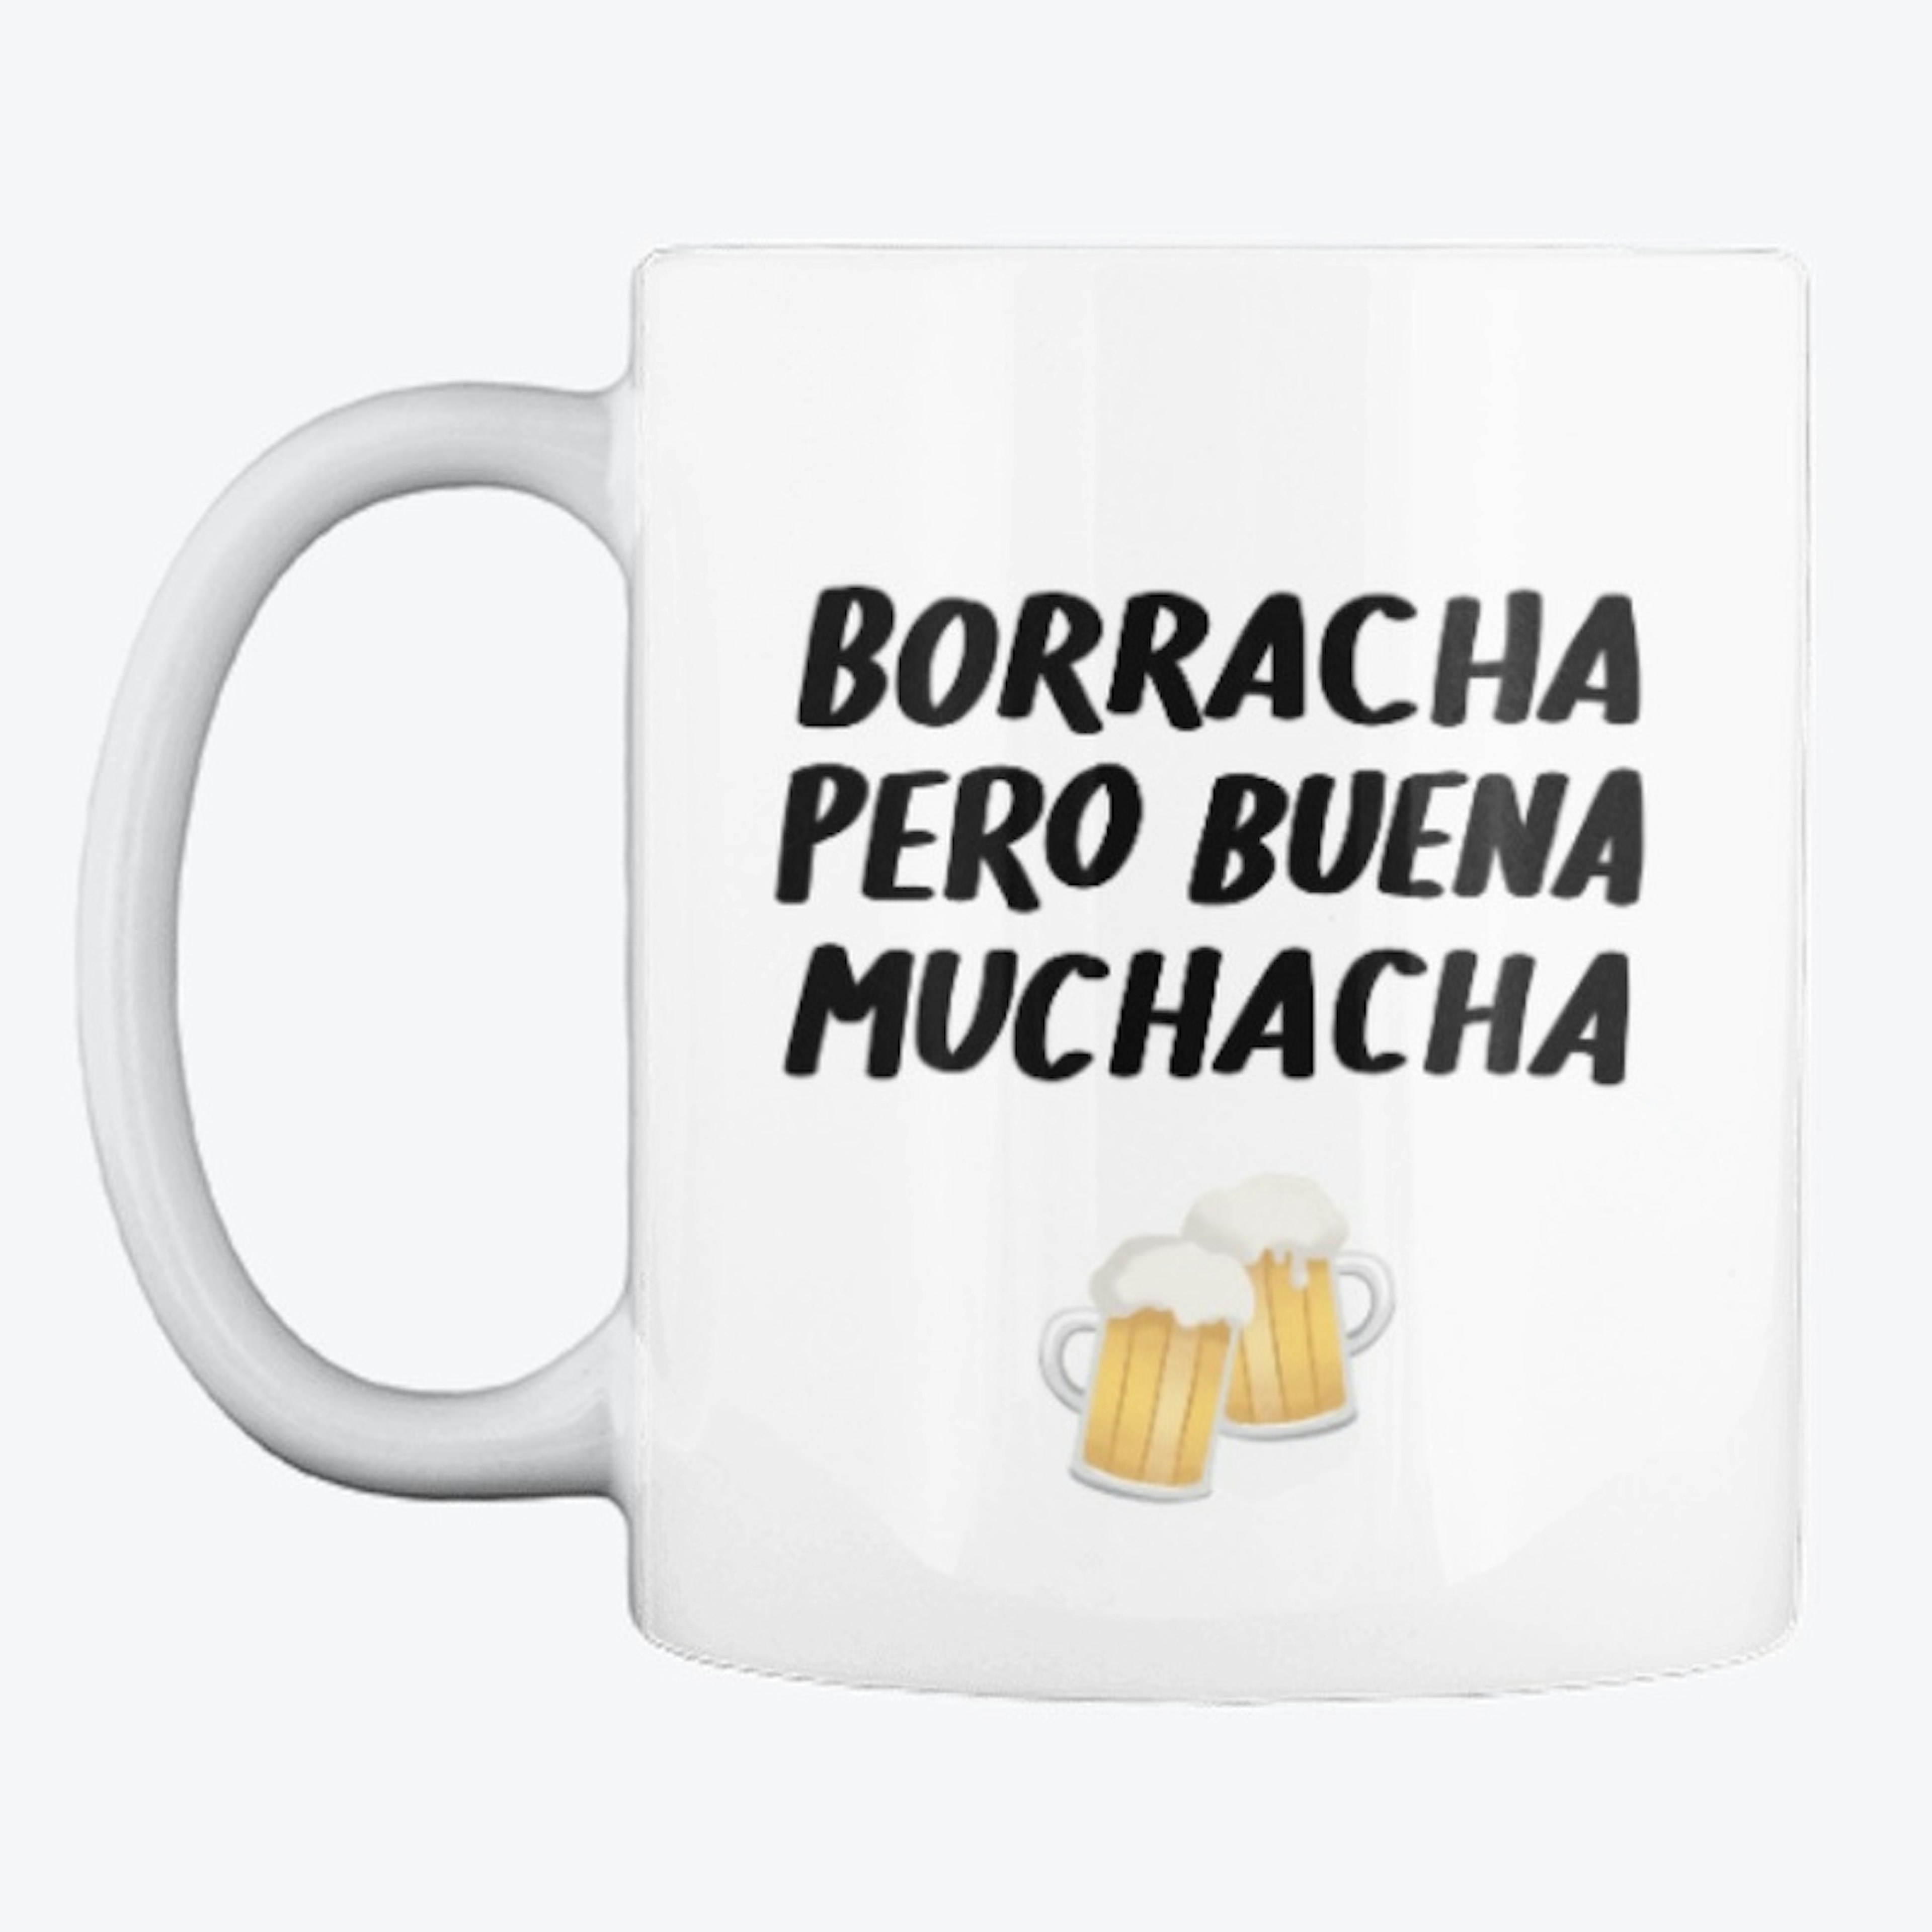 Borracha